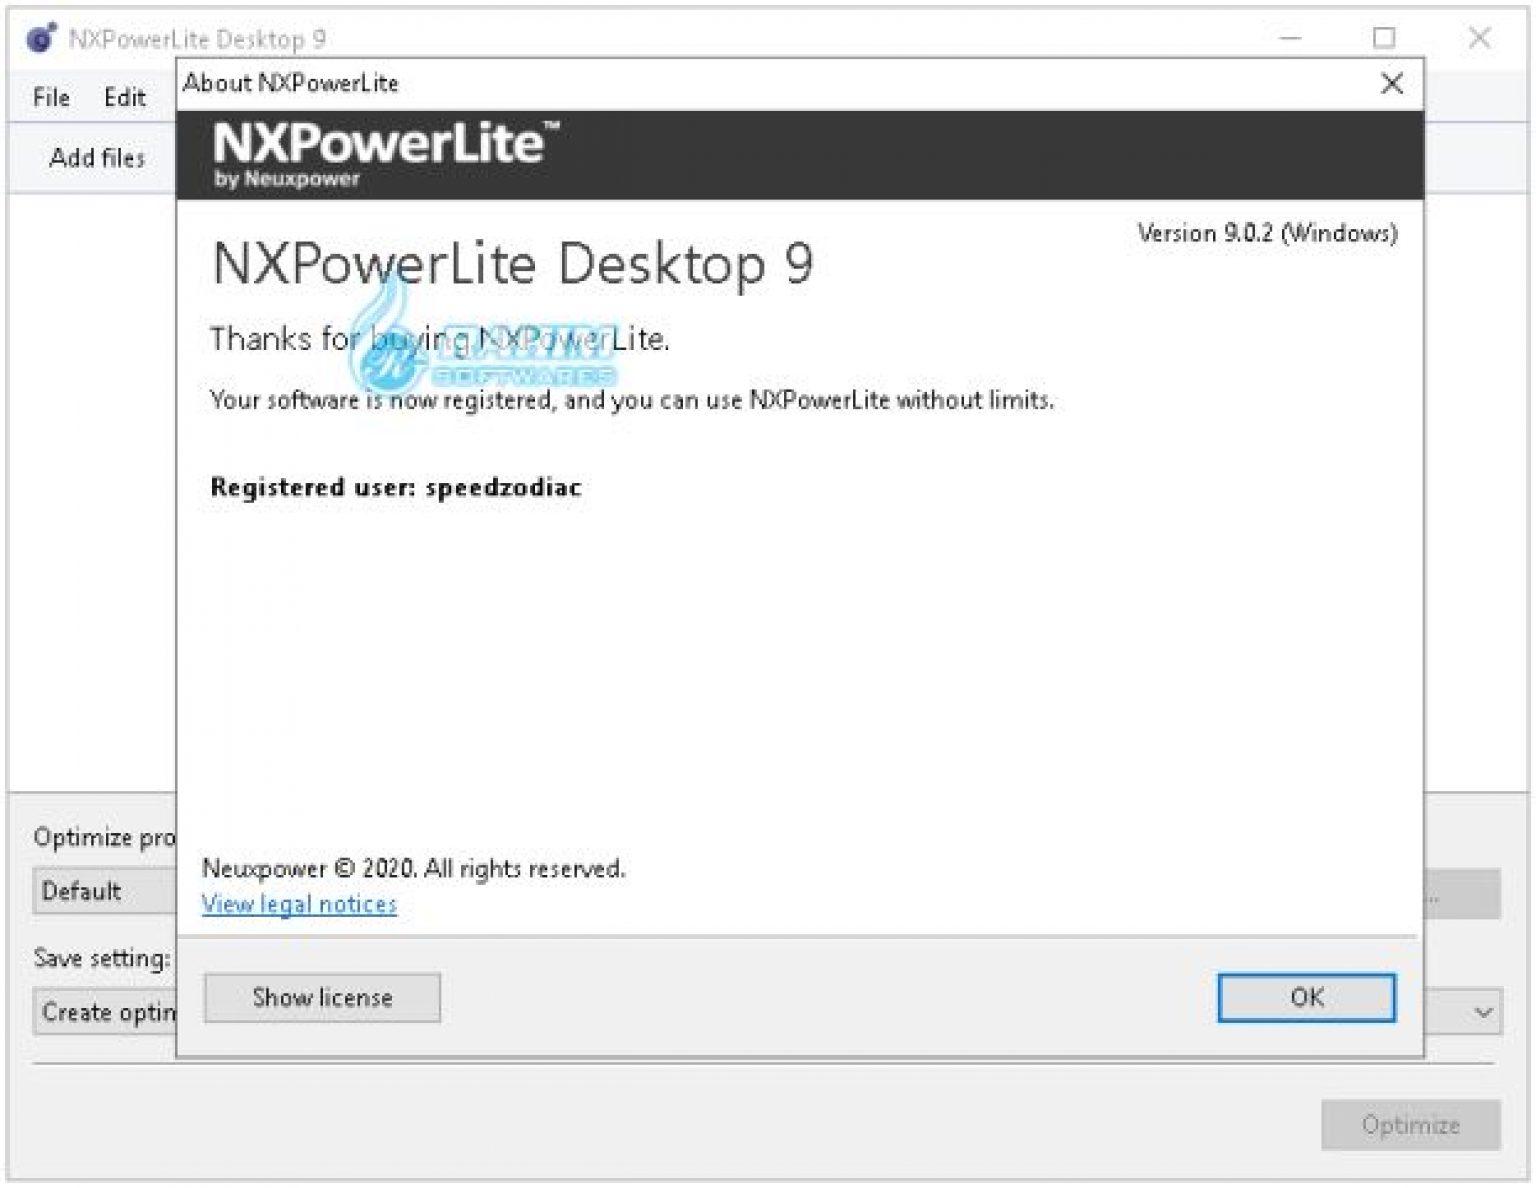 NXPowerLite Desktop 10.0.1 download the new